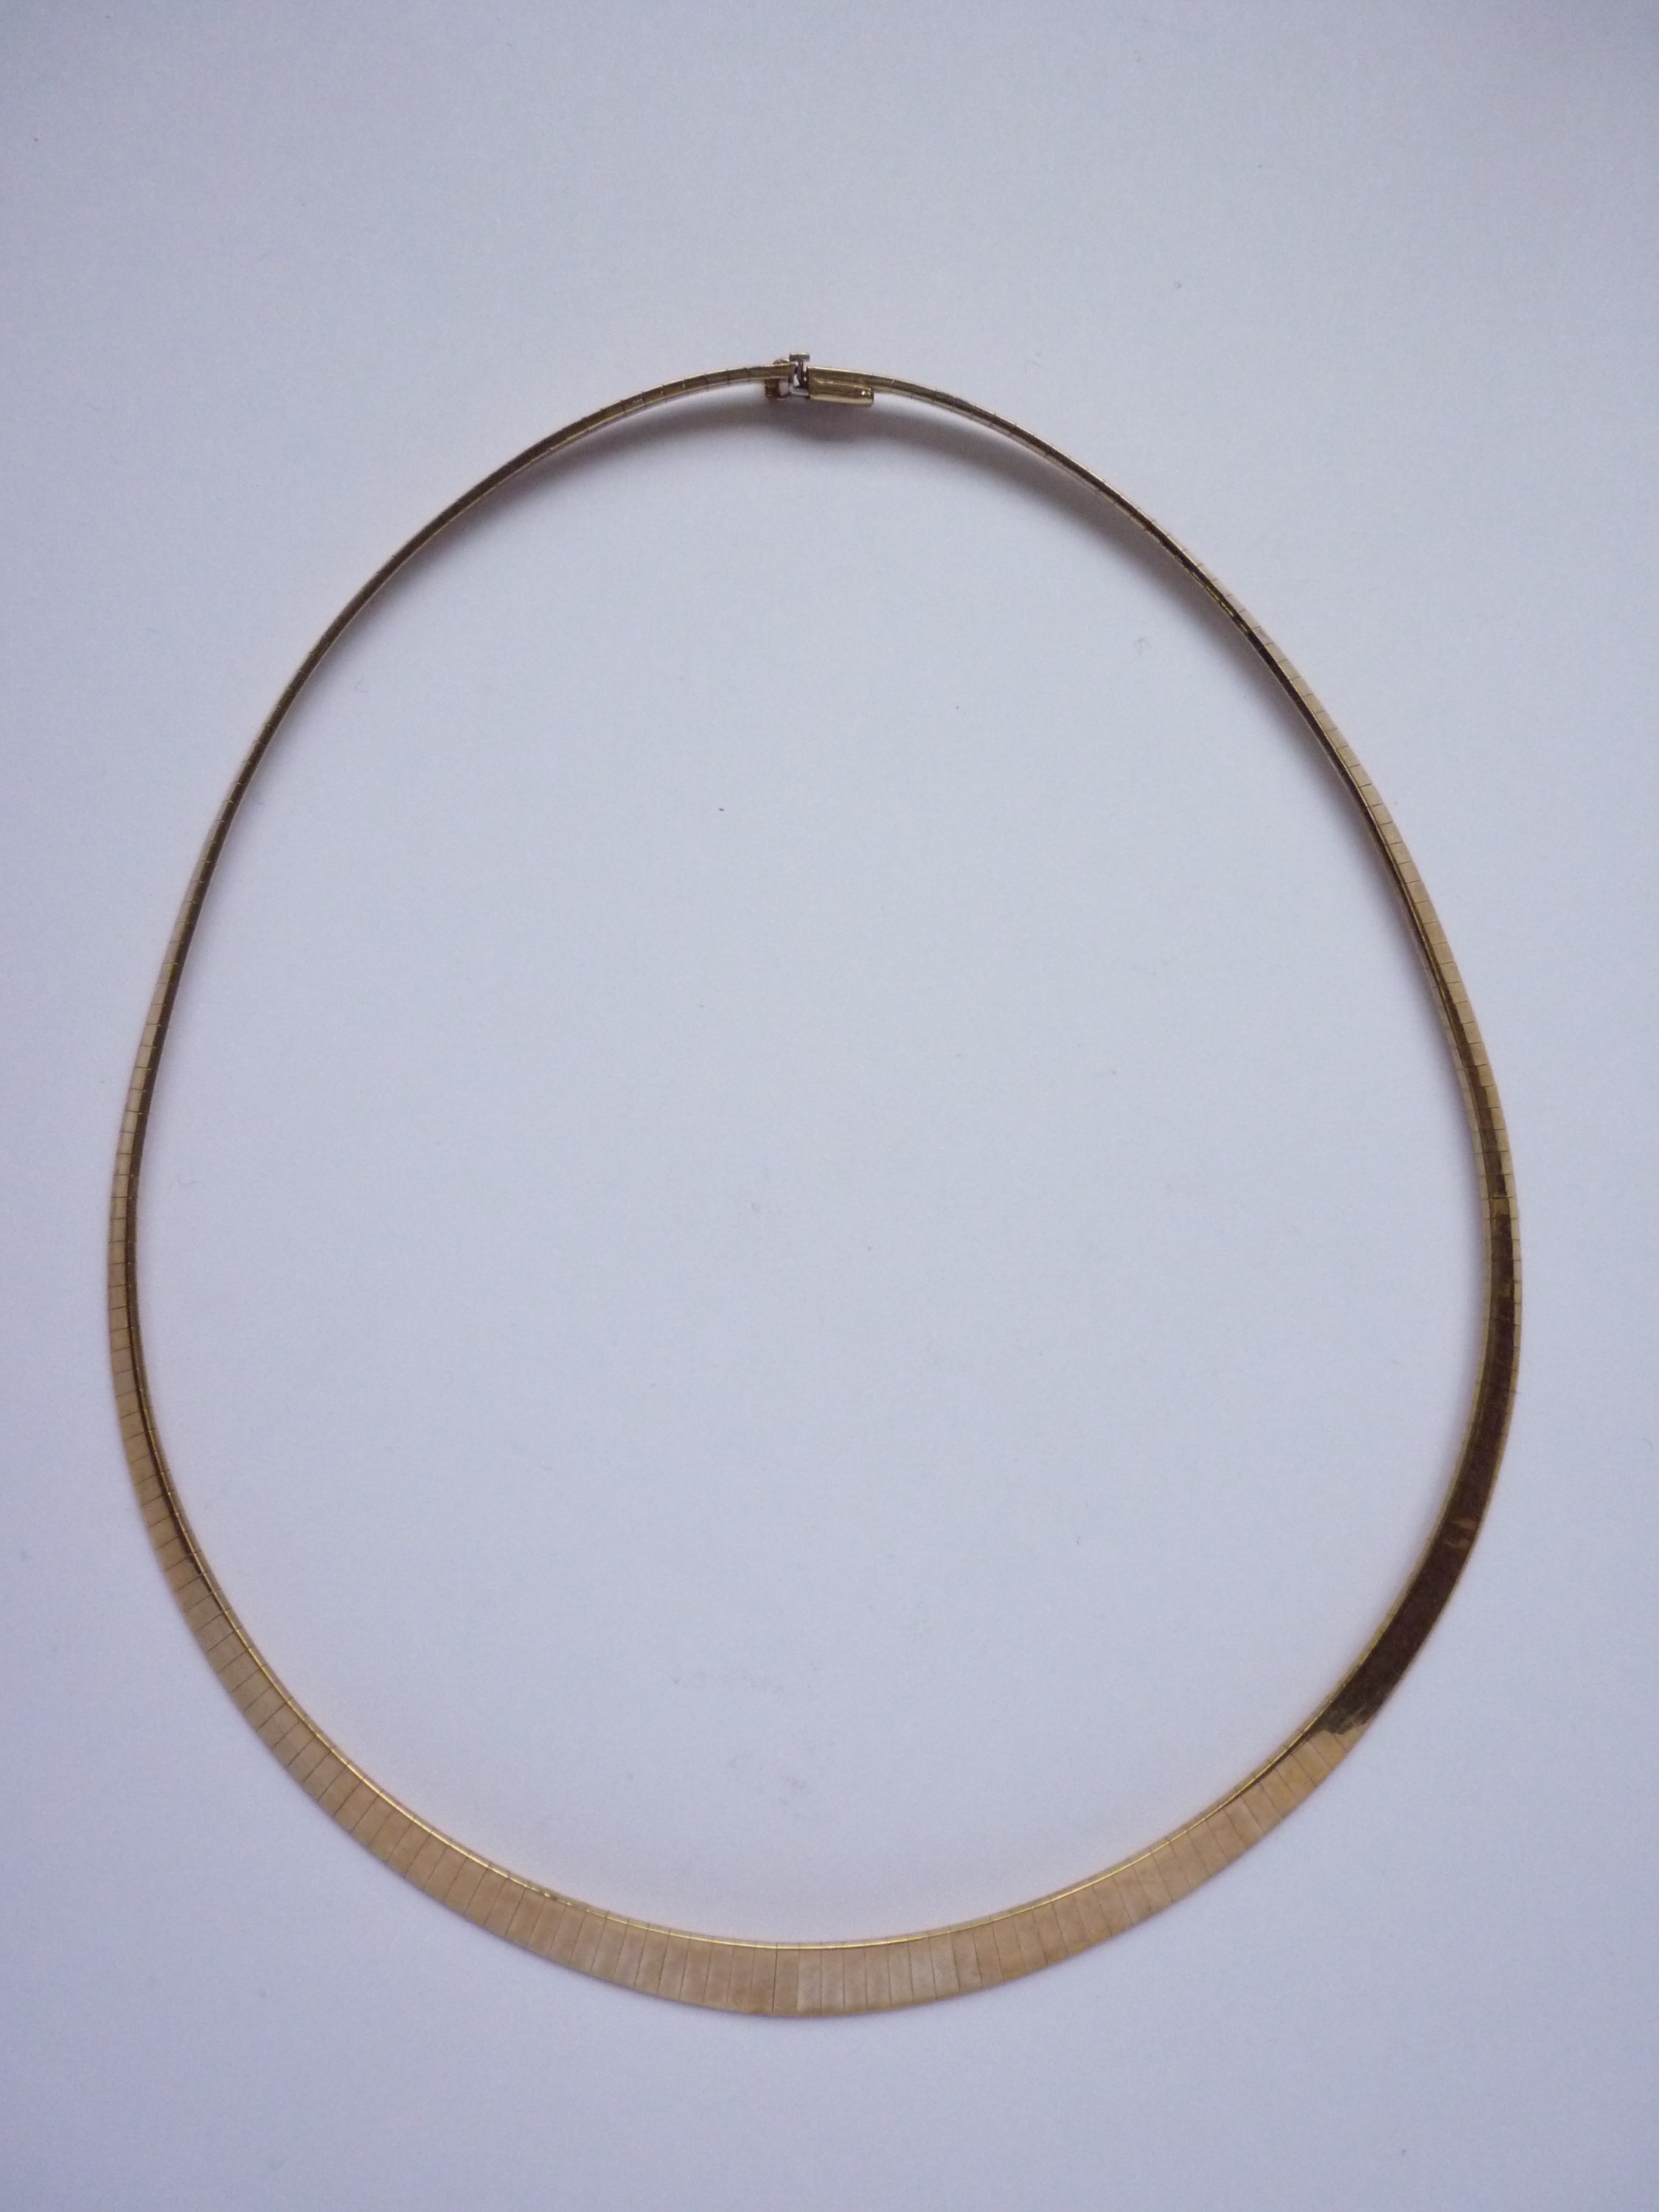 A modern 9ct gold collar necklace, 26.6g